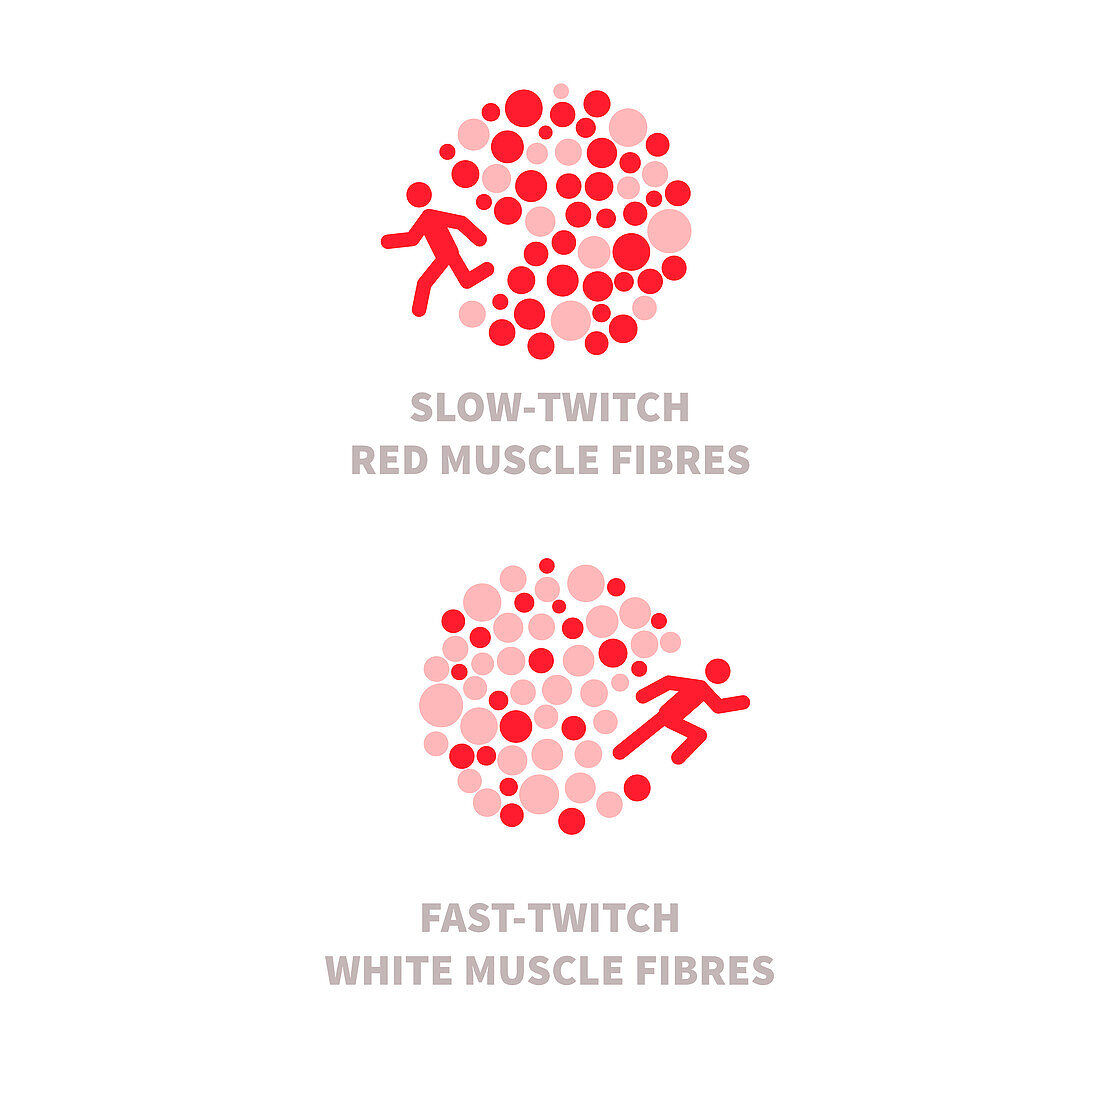 Muscle fibre types, illustration